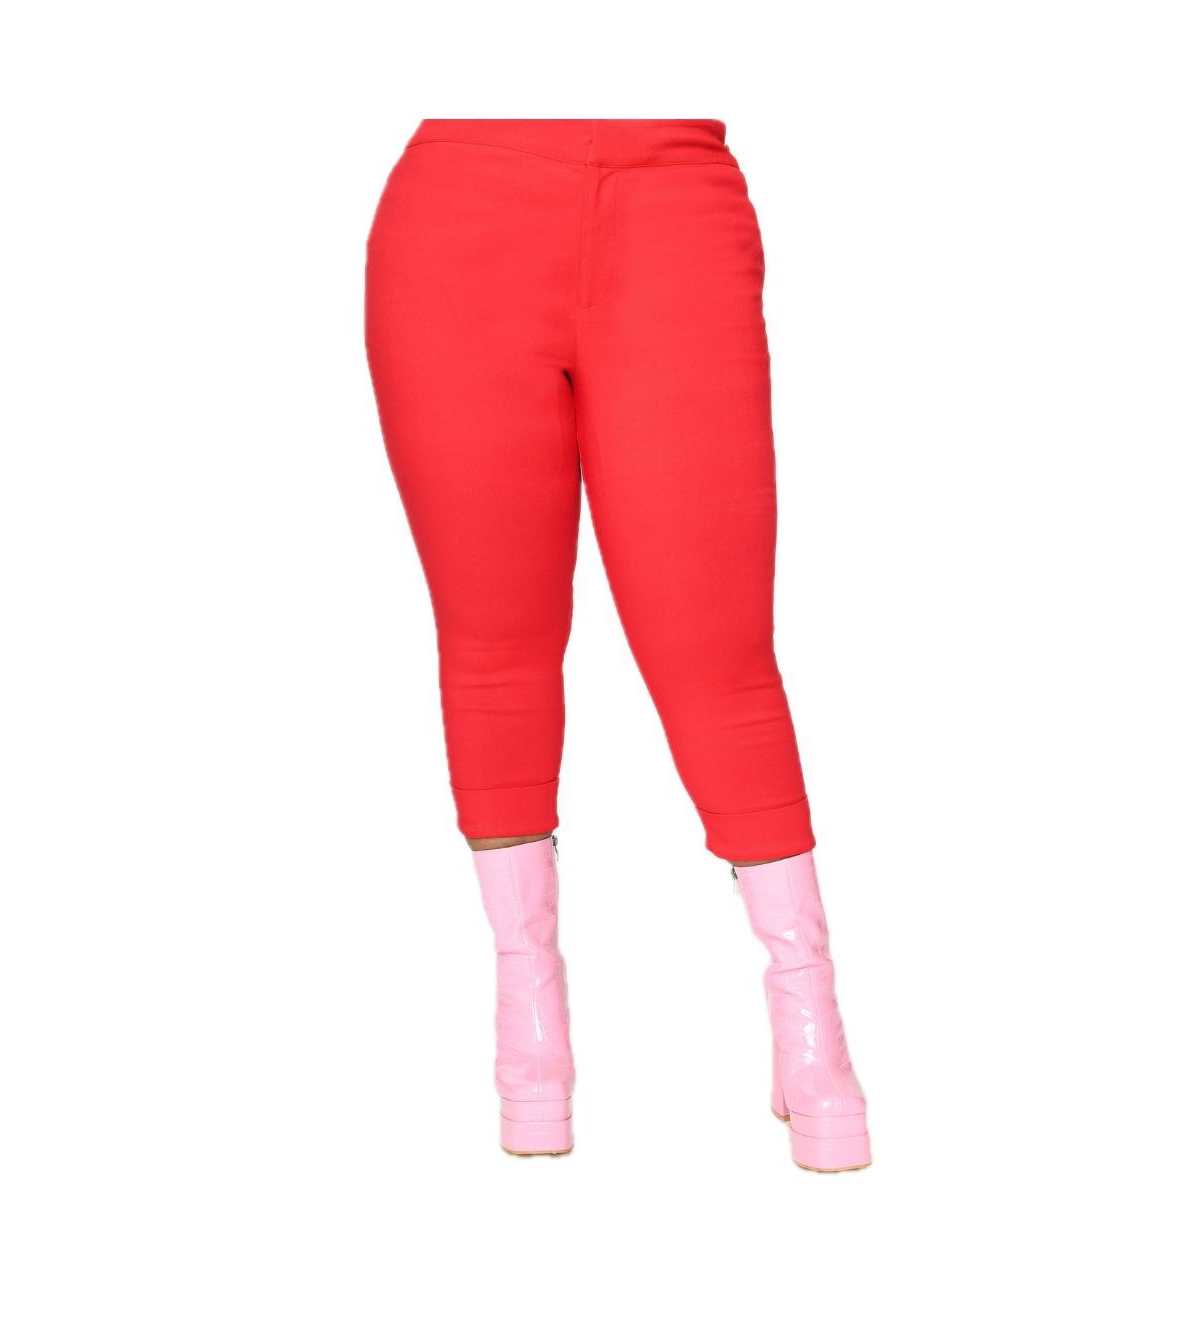 Plus Size Kitschy Shaped Pocket Smarty Pants Capris - Red/white polka dot pocket